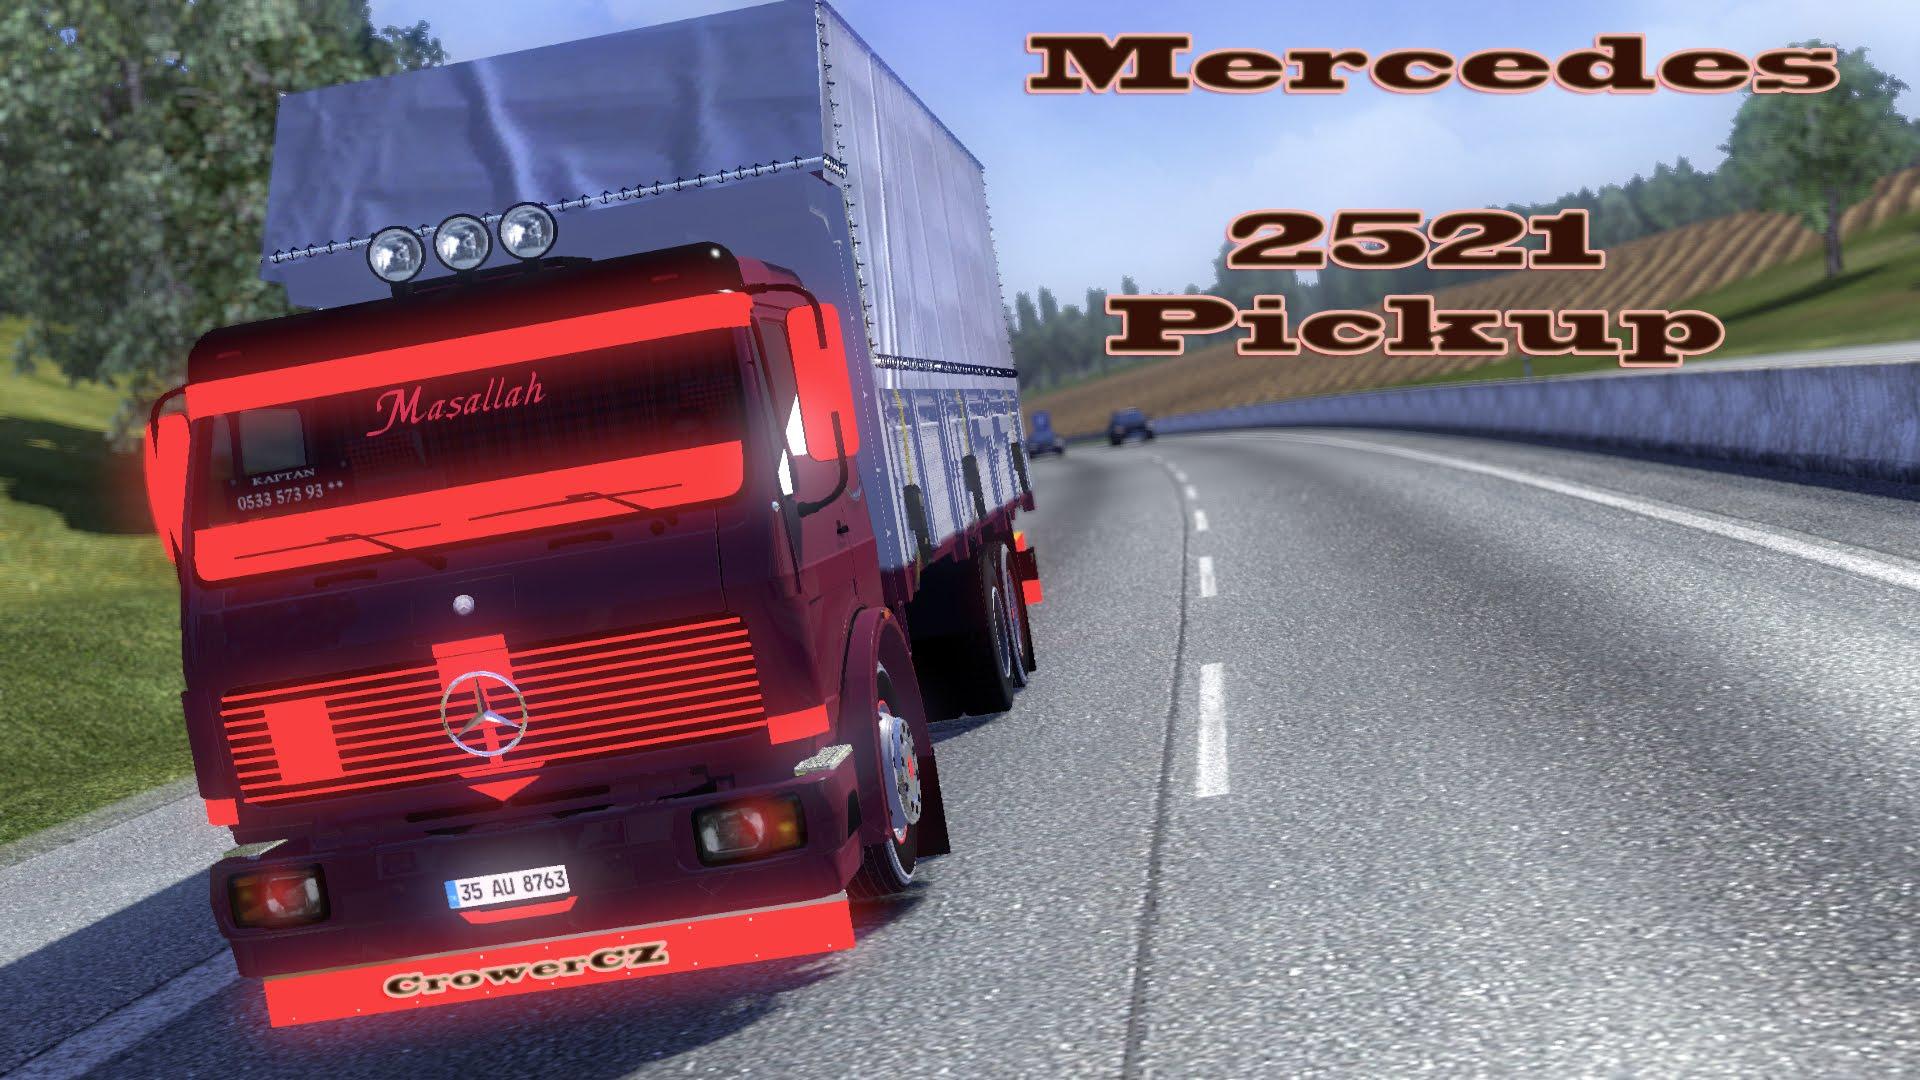 Мод етс гелик. Euro Truck Simulator 2 Mercedes. Mercedes 2521. УАЗ для етс 2. Пикап трак симулятор.